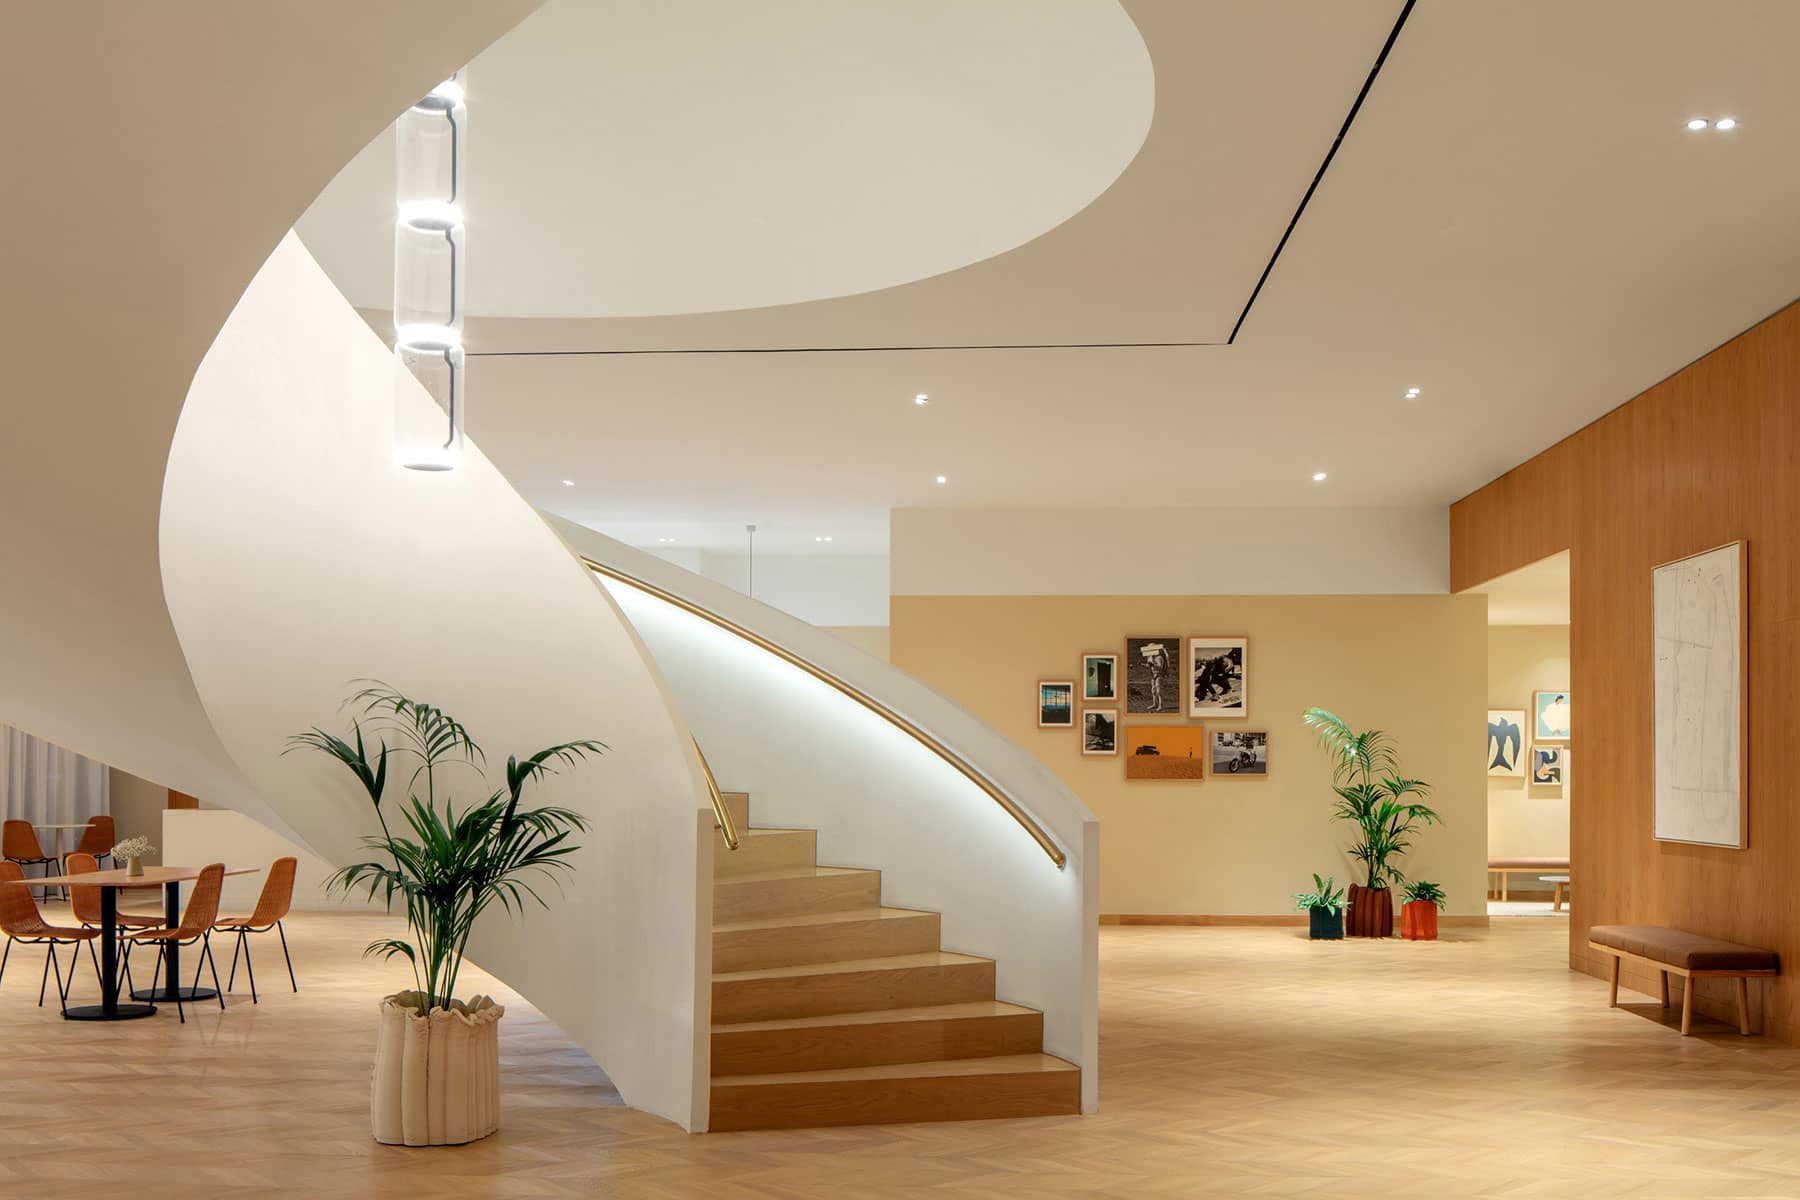 Architecture Photography Dubai: Spiral Staircase at Staybridge Suites, Media City Dubai.